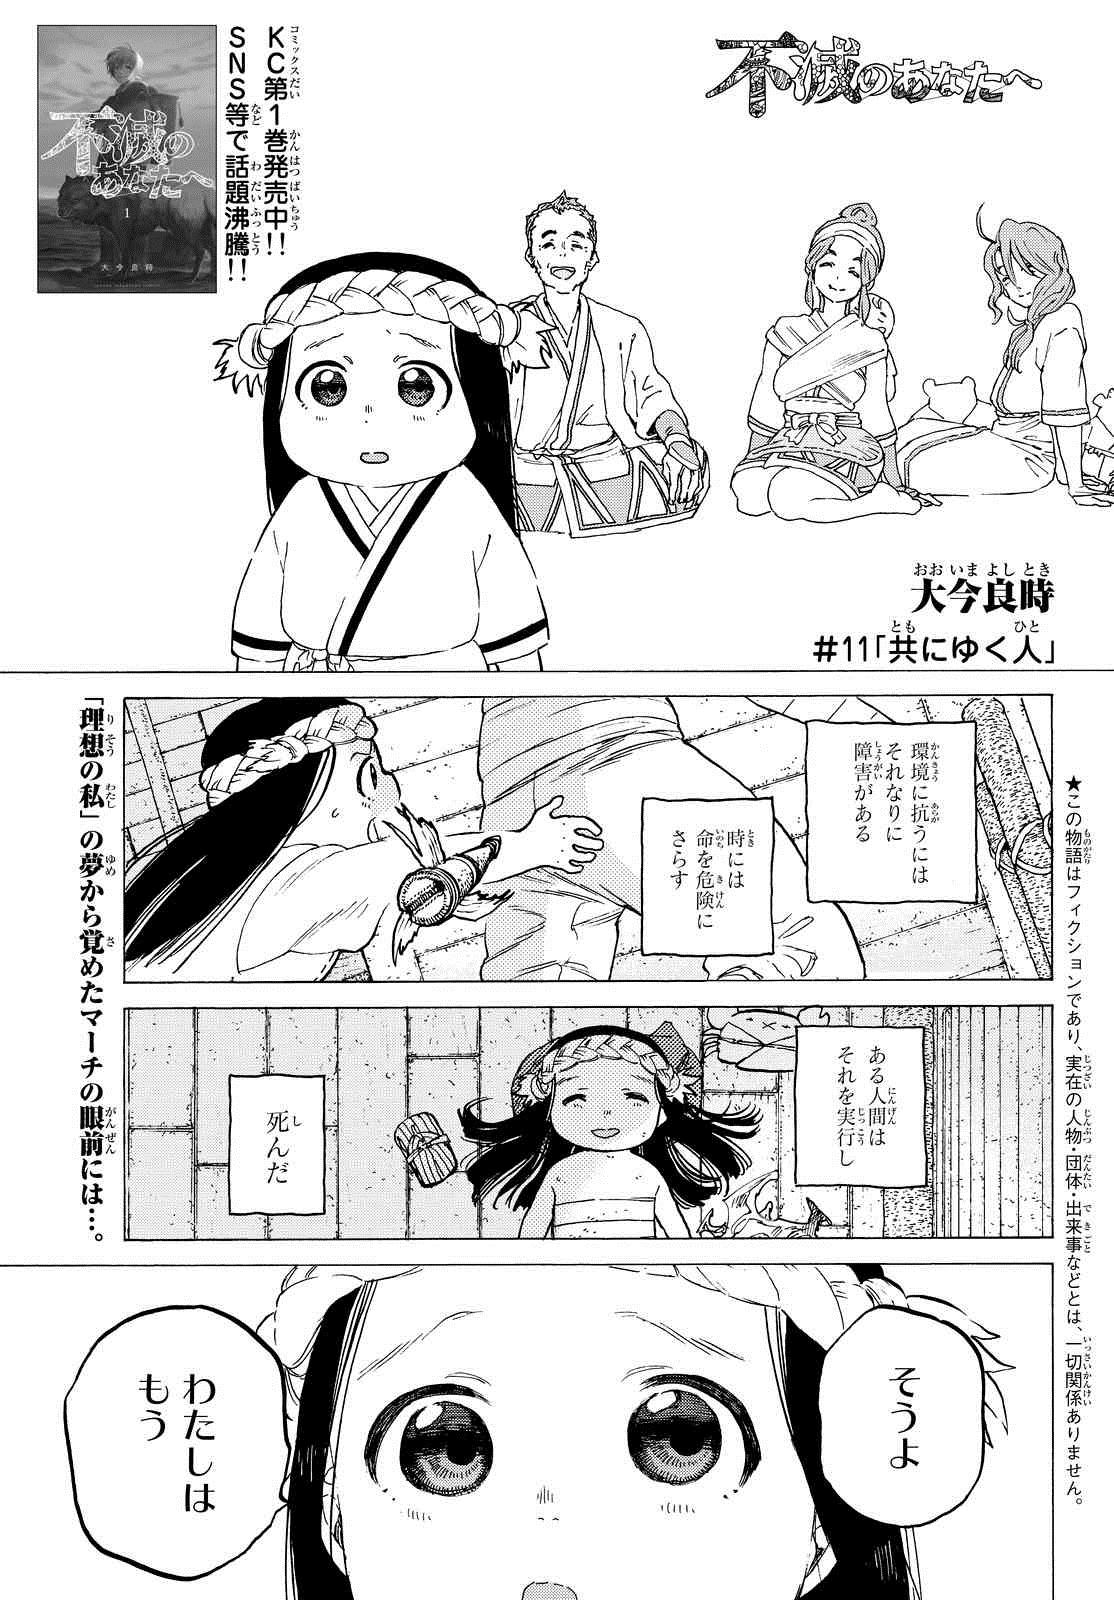 To Your Eternity Volume 11 (Fumetsu no Anata e) - Manga Store - MyAnimeList .net